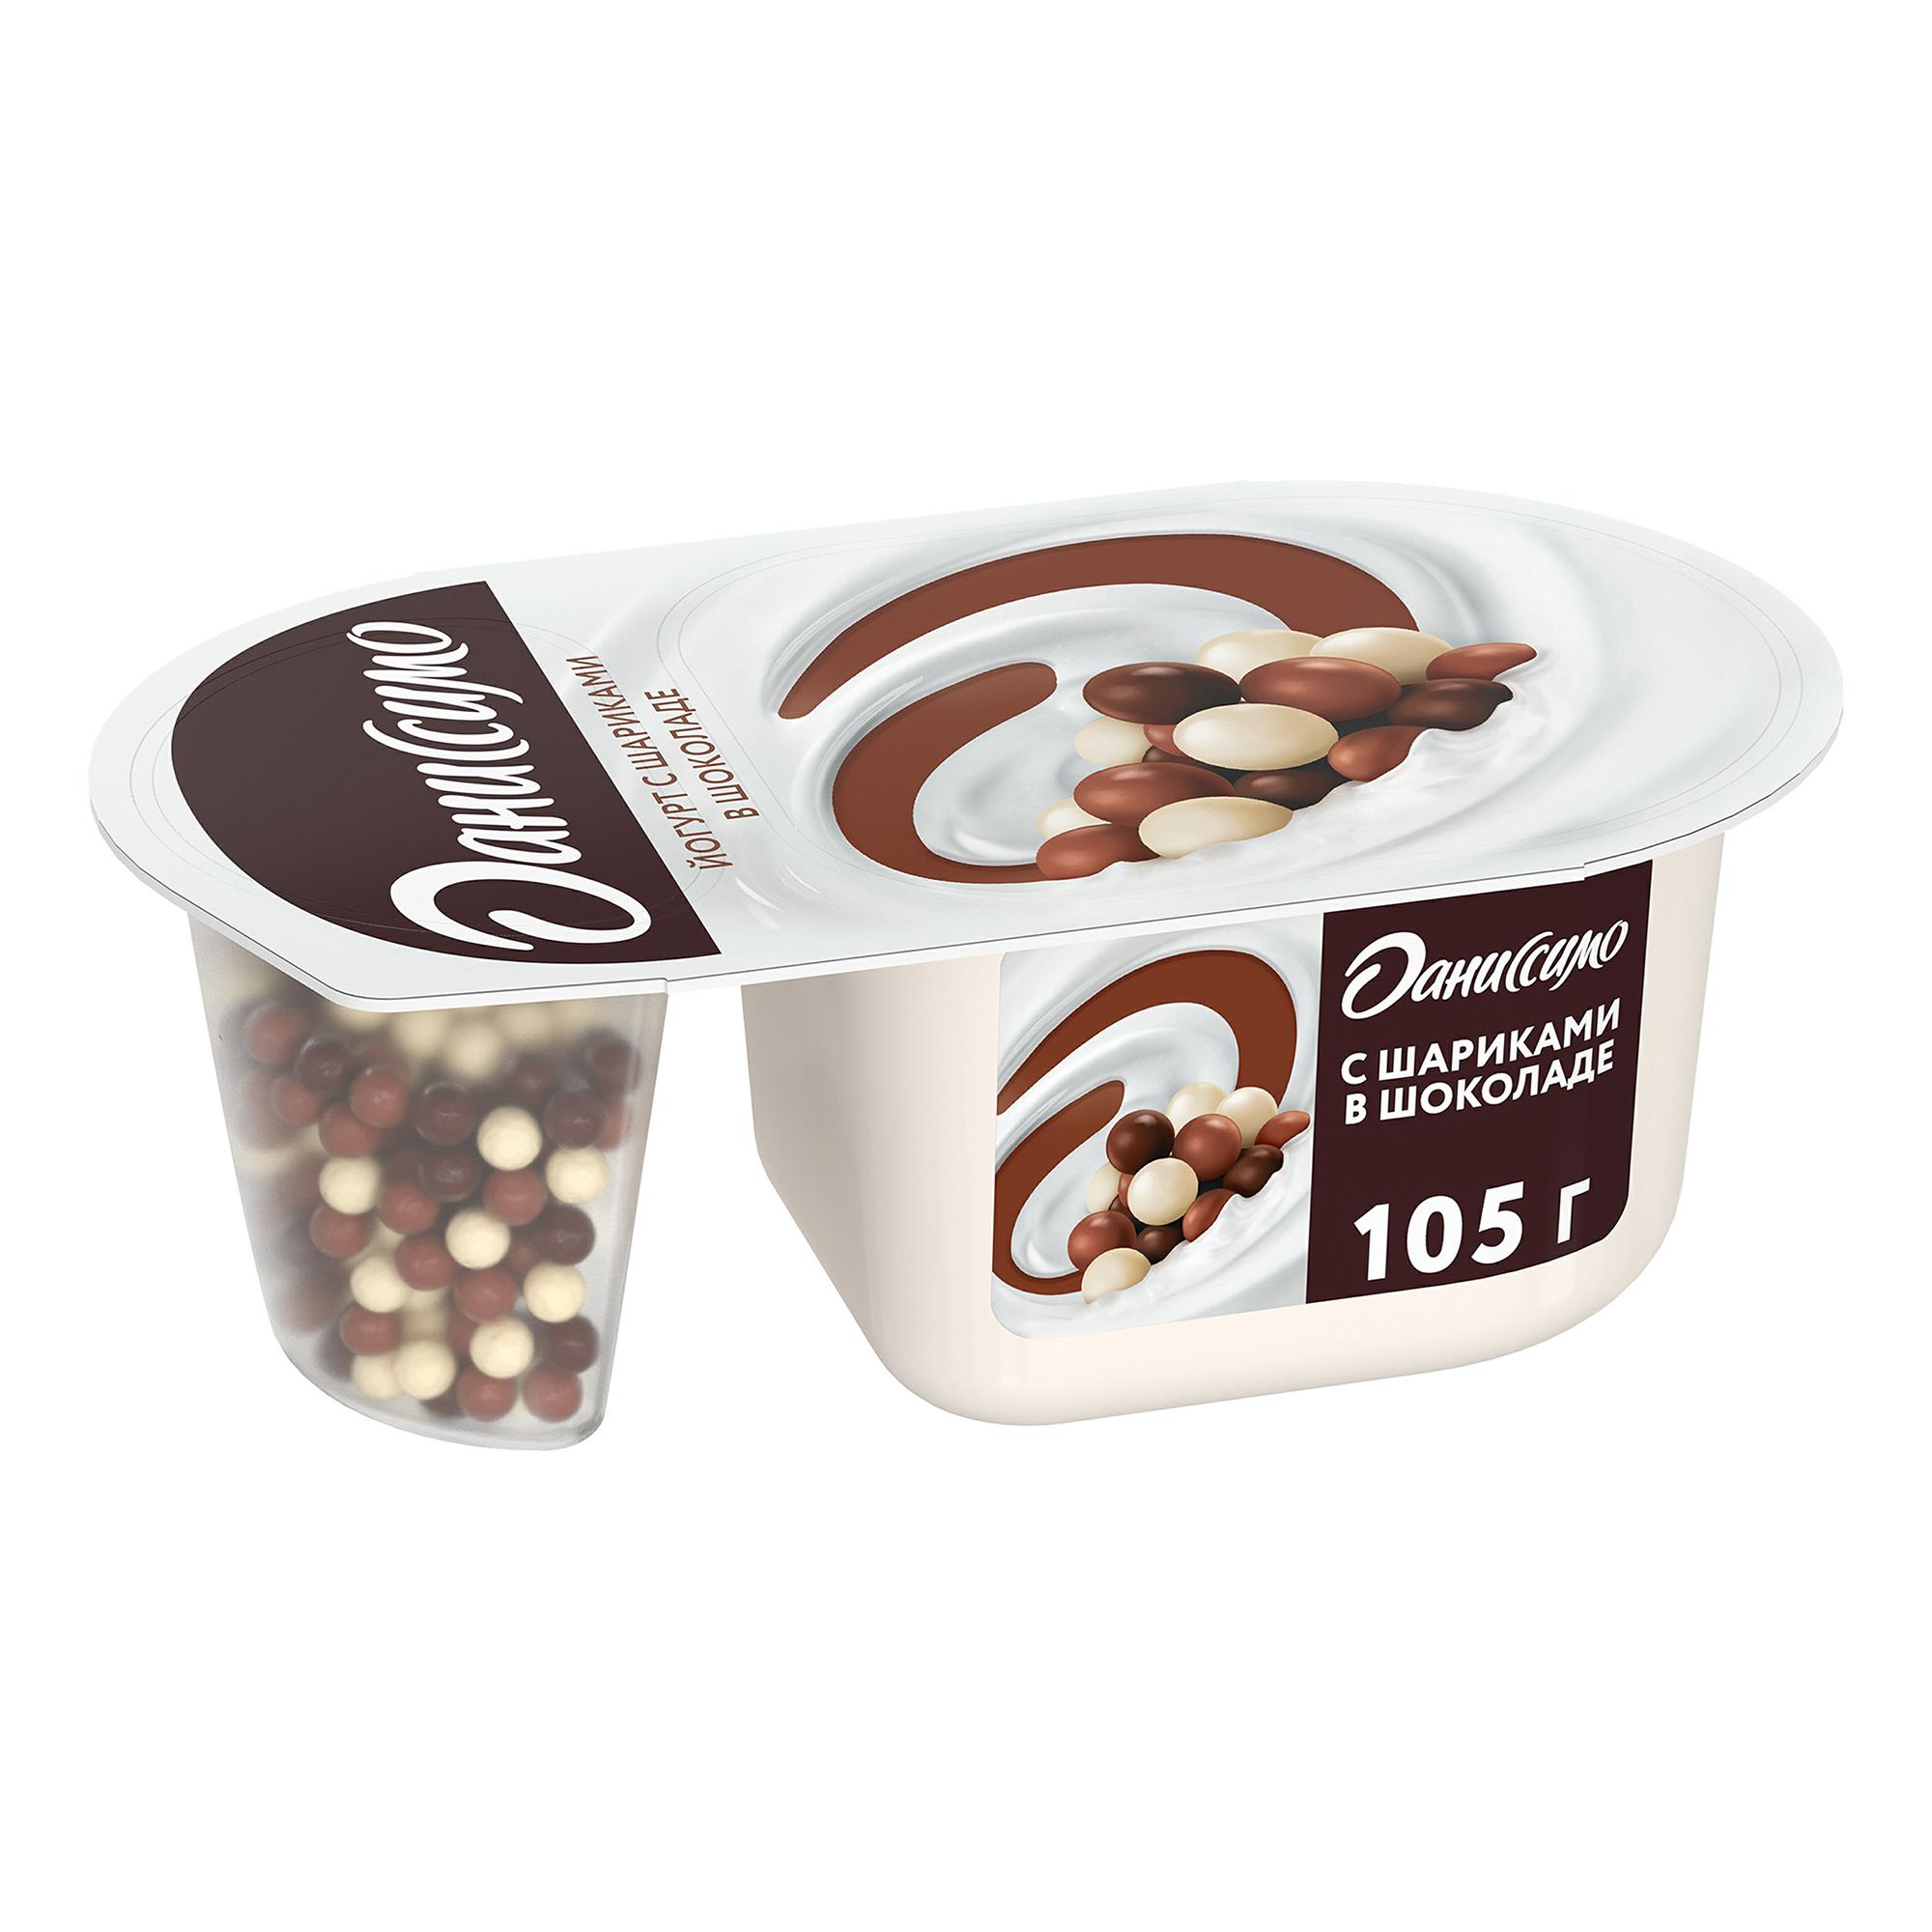 Данон Даниссимо Фантазия йогурт хруст шарики в шоколаде 105г шт - интернет-магазин Близнецы